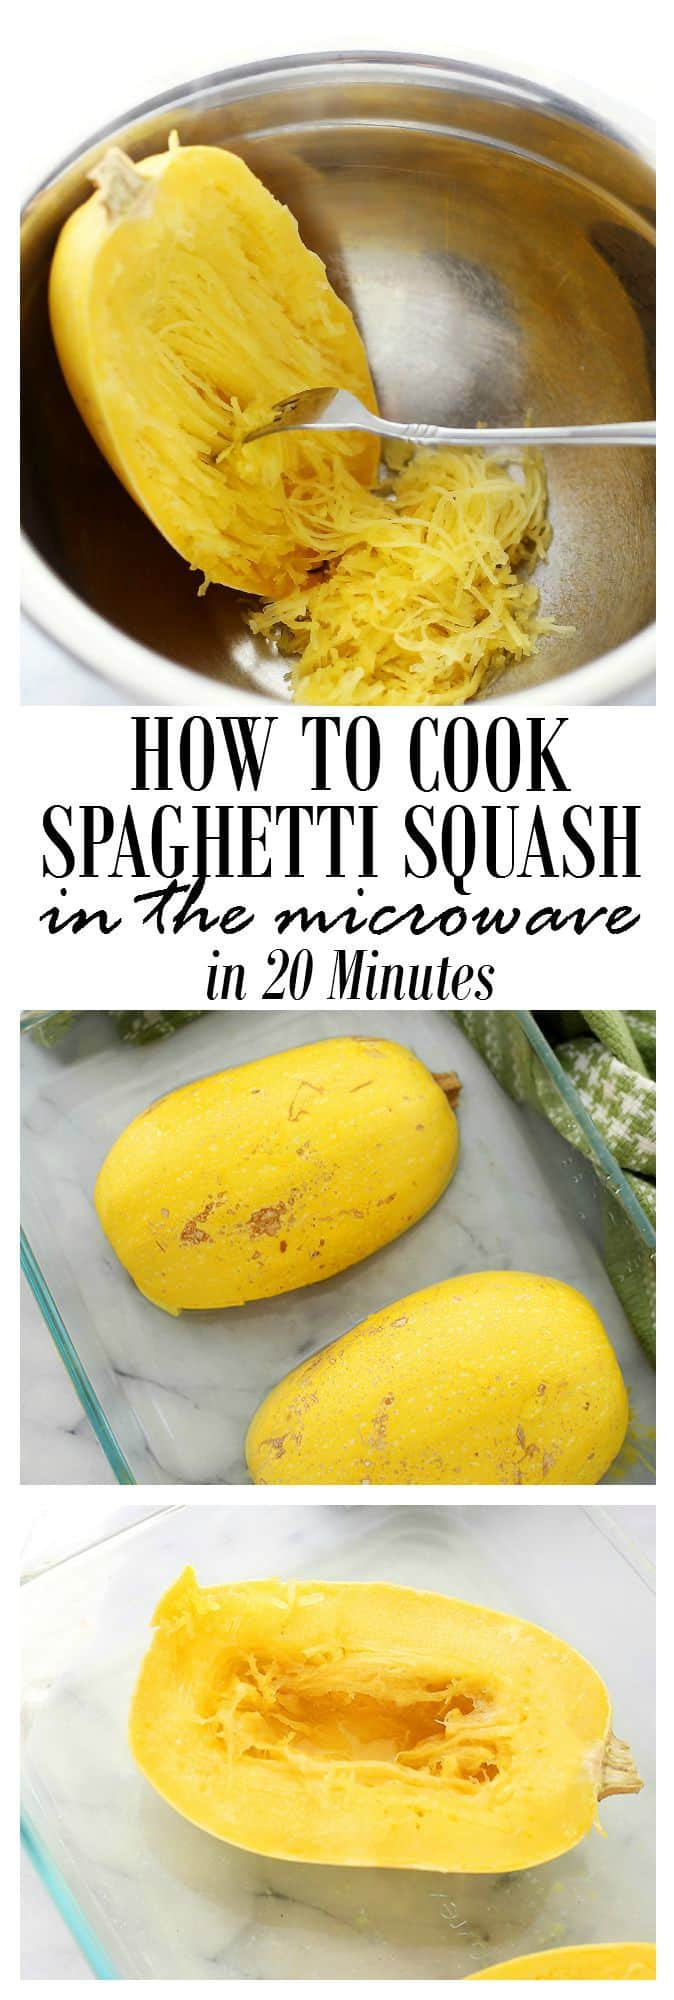 Microwave Spaghetti Squash Whole
 Mediterranean Spaghetti Squash Boats